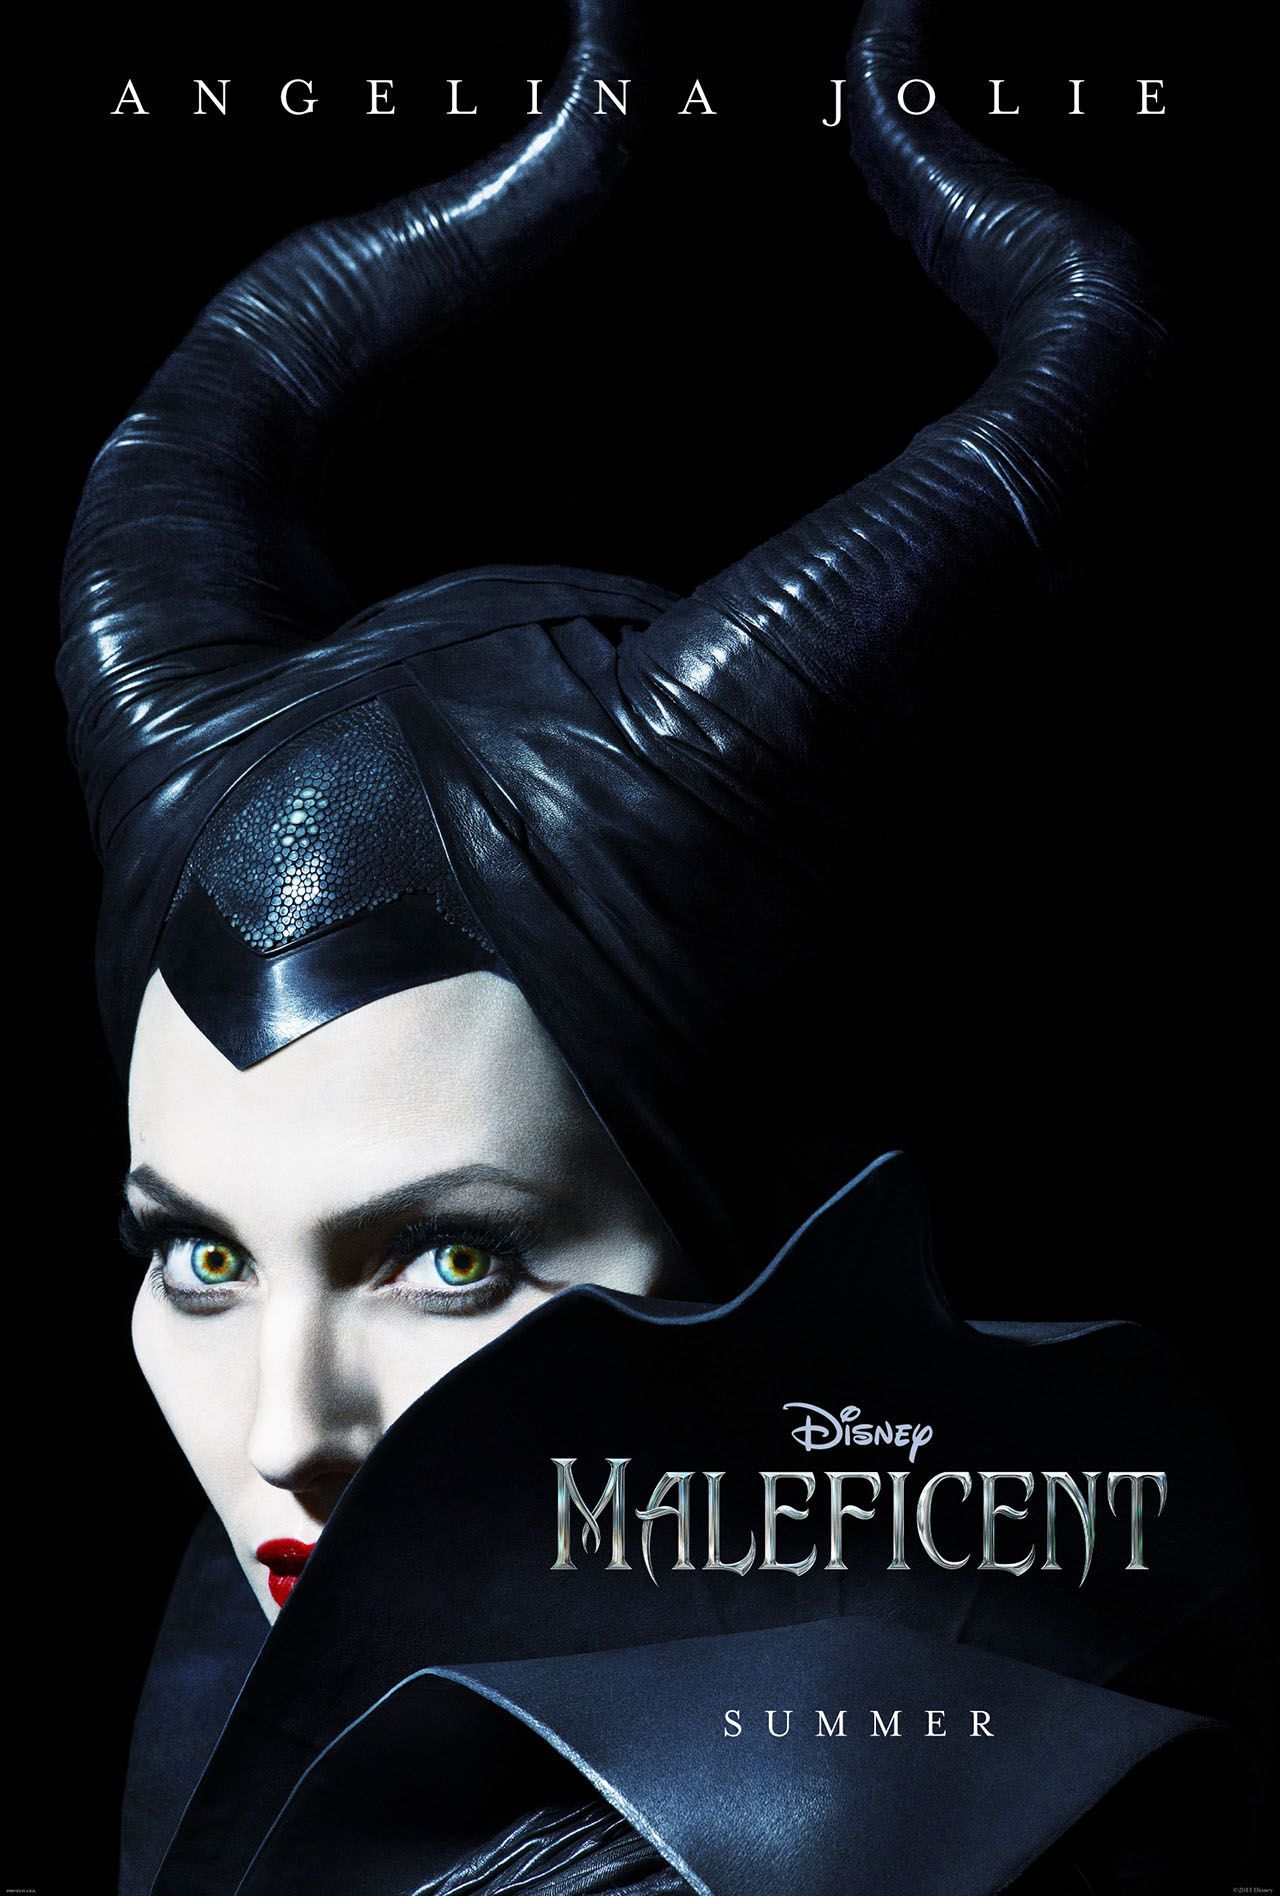 ‘Maleficent’ Trailer: Meet Angelina Jolie the Evil Fairy